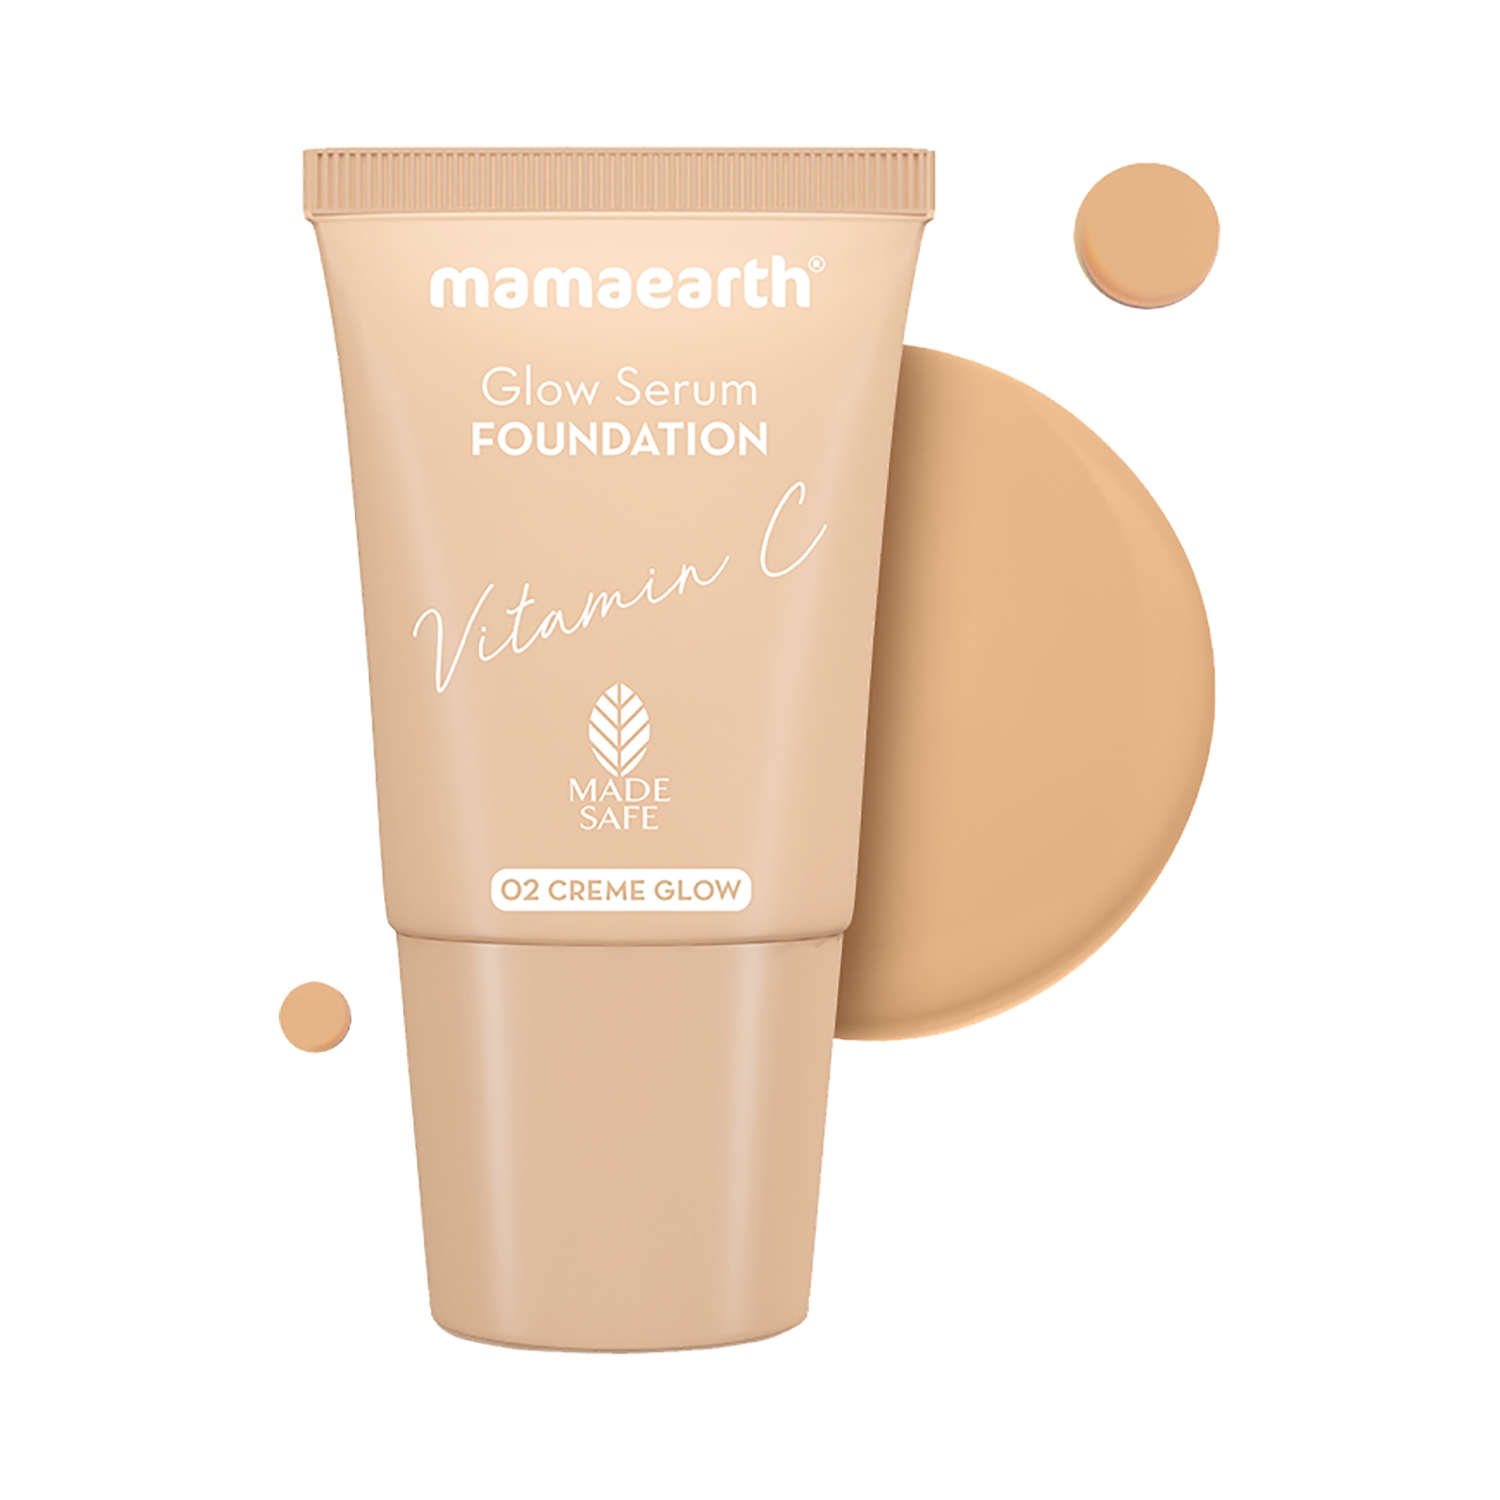 Mamaearth | Mamaearth Glow Serum Foundation Mini Tube With Vitamin C & Turmeric - 02 Crème Glow (18ml)